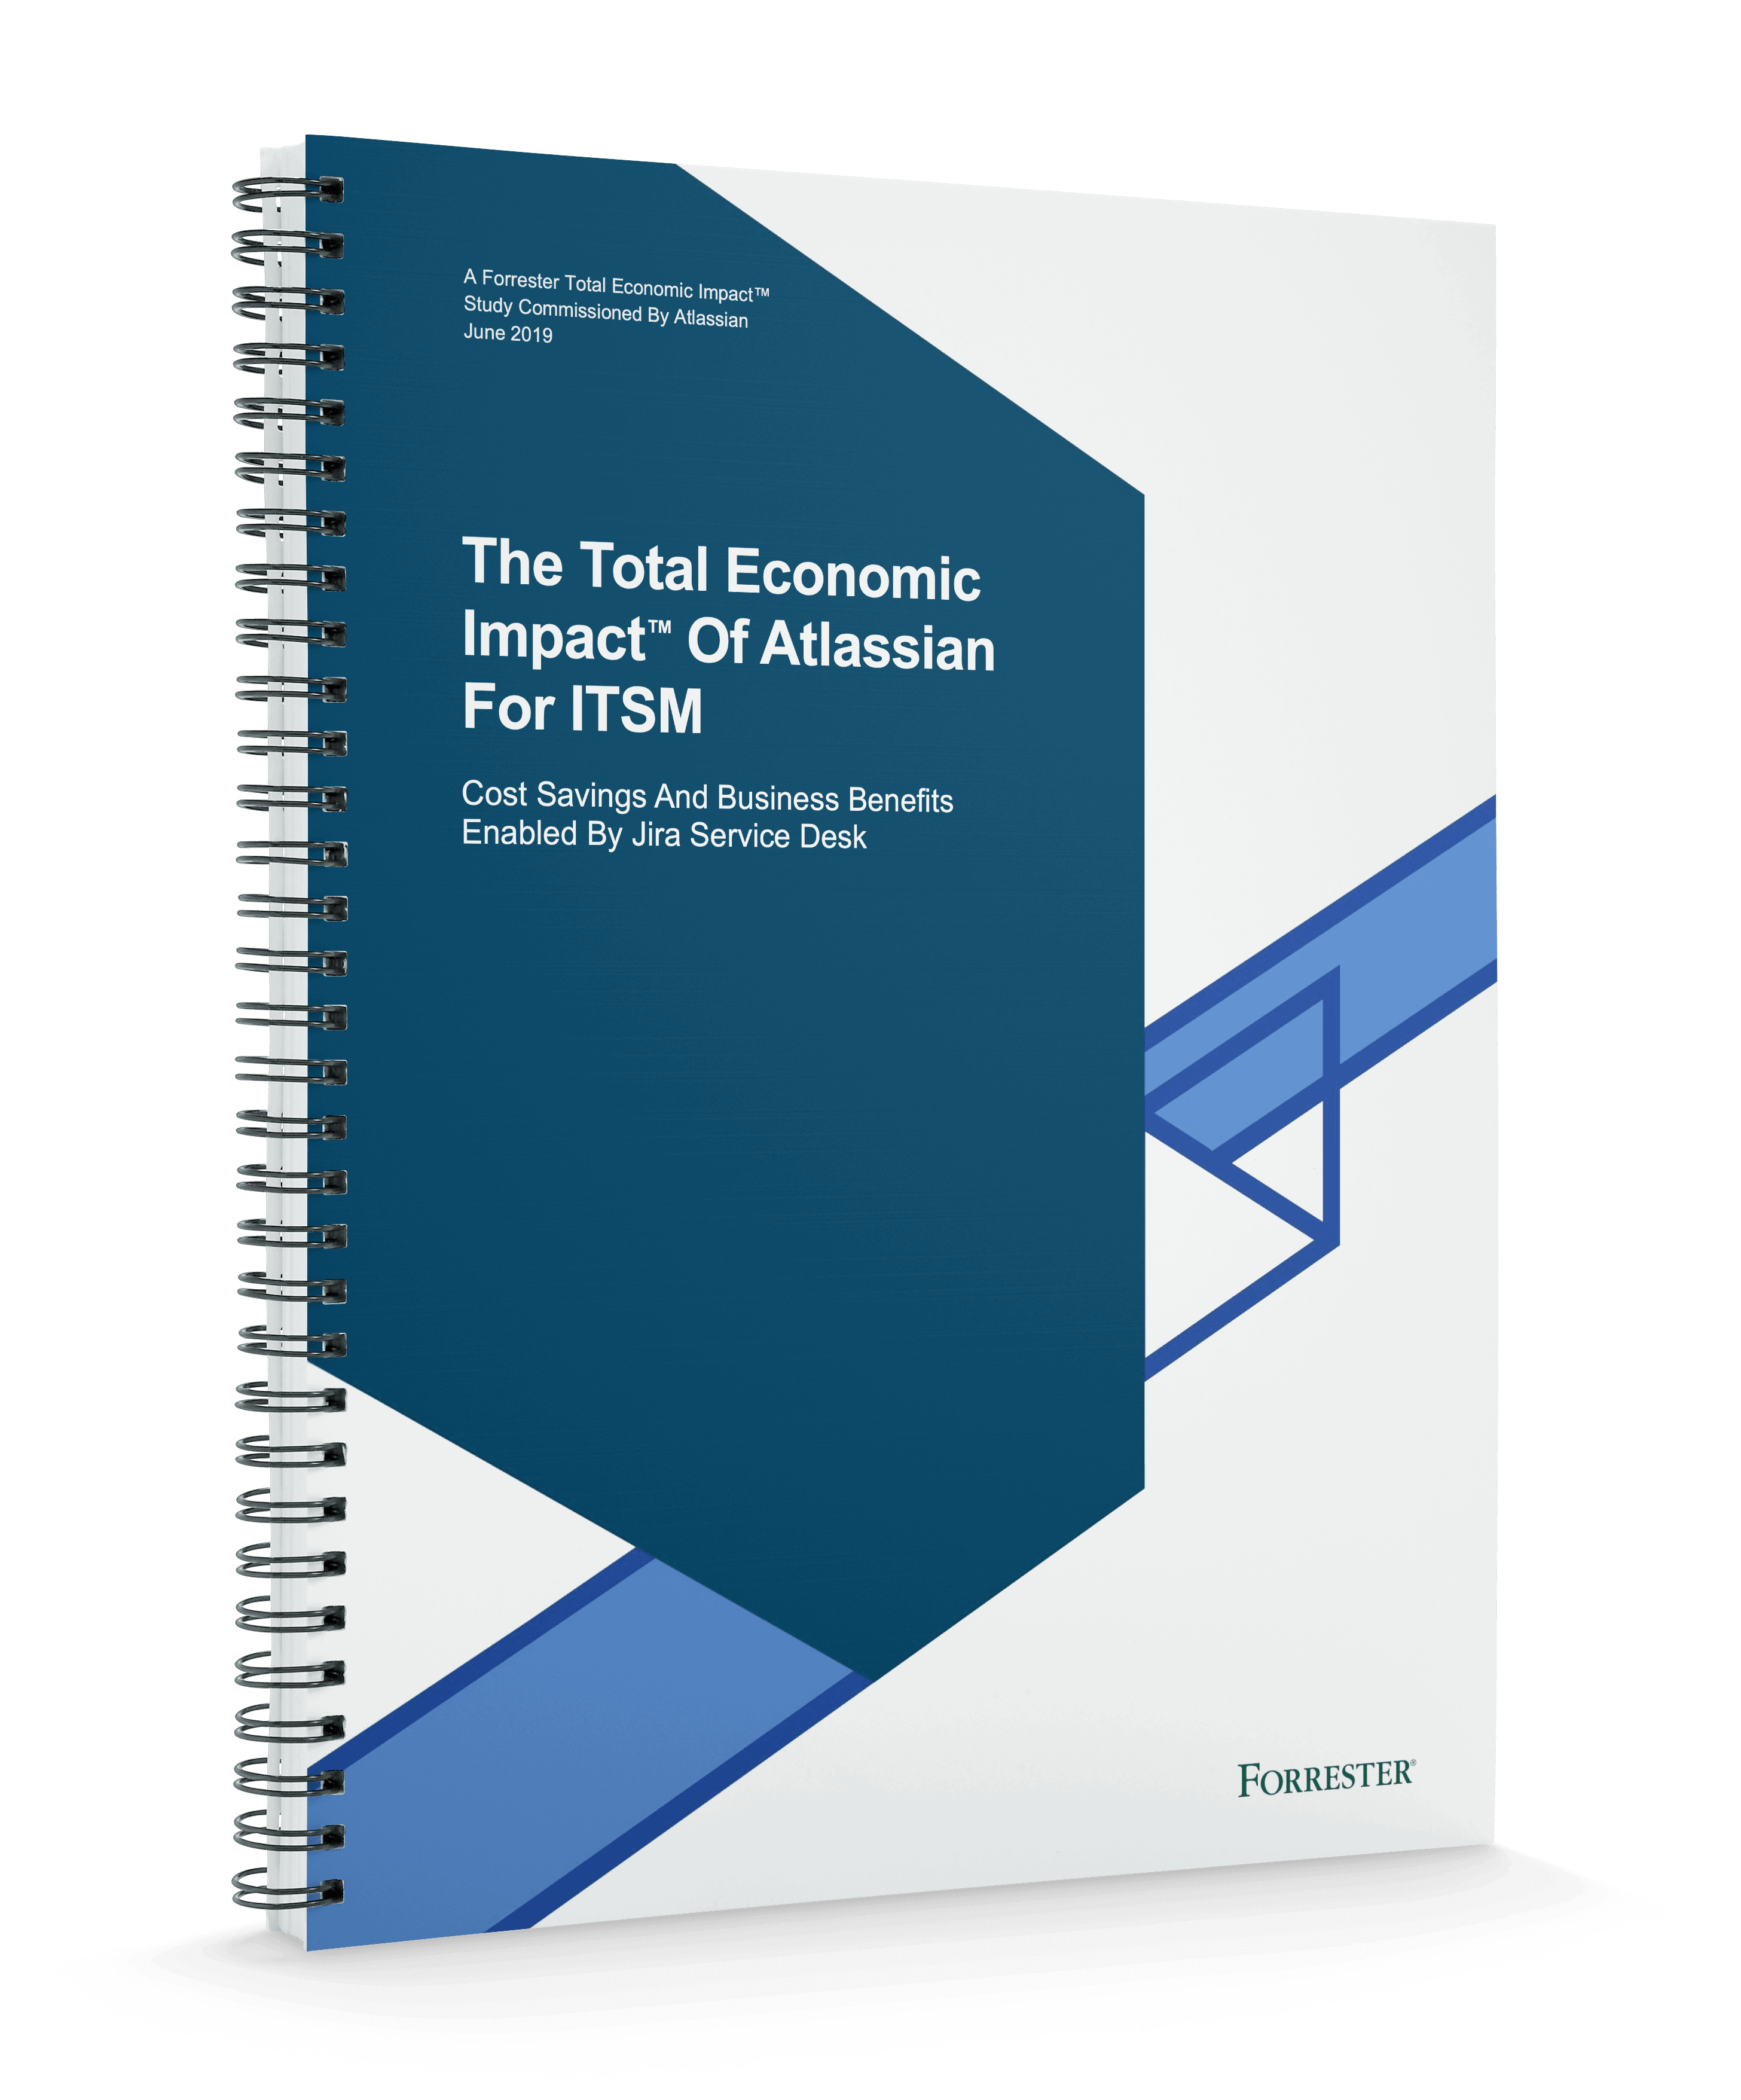 Forrester Total Economic Impact™ de Atlassian para ITSM